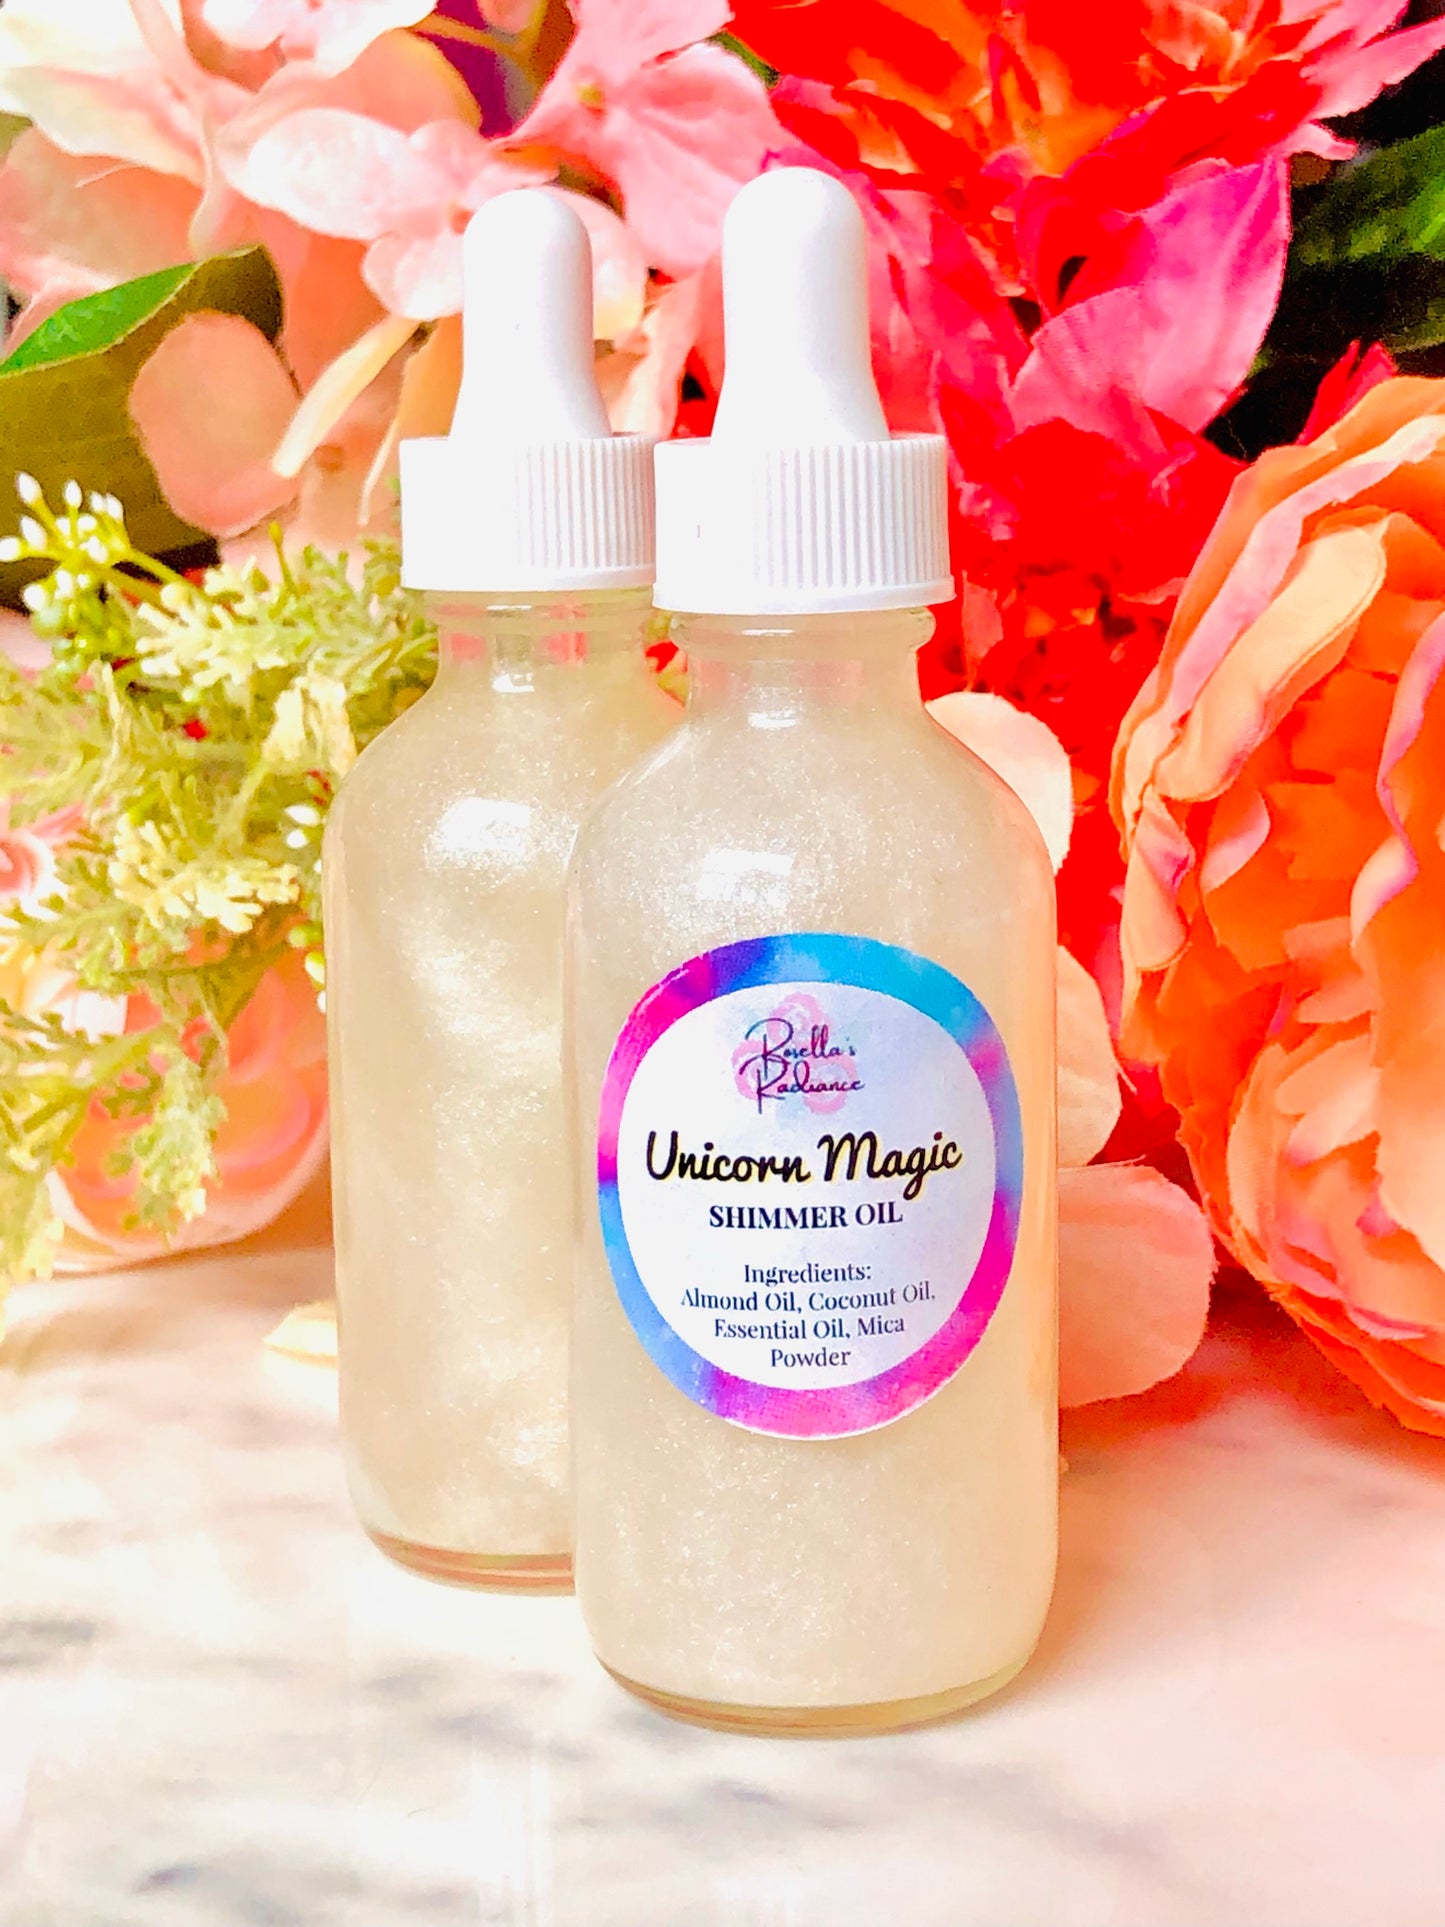 Unicorn Magic Shimmer Oil